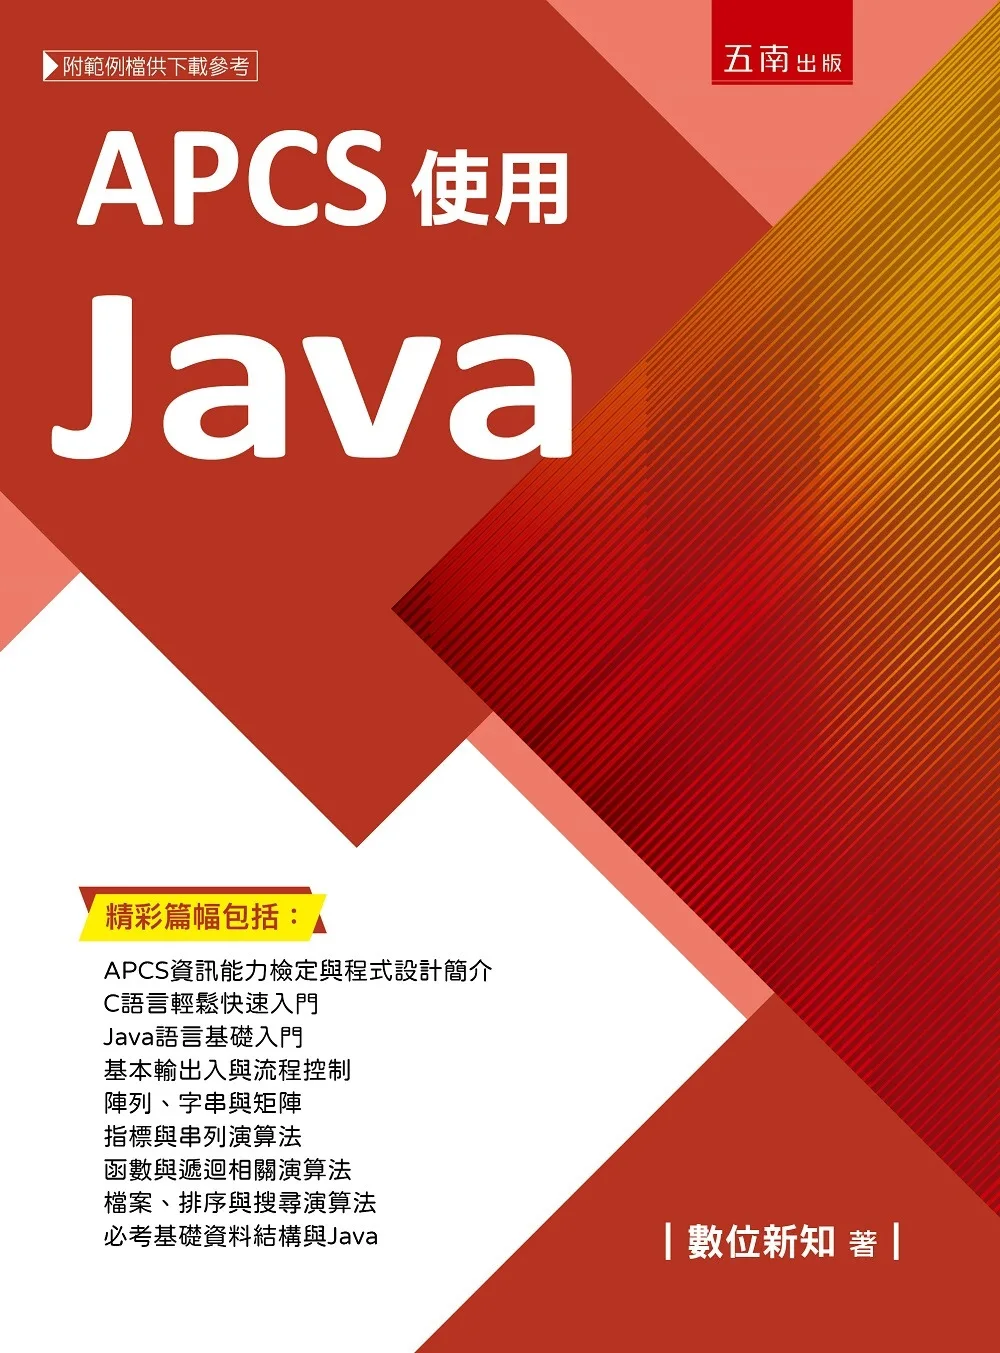 APCS使用Java